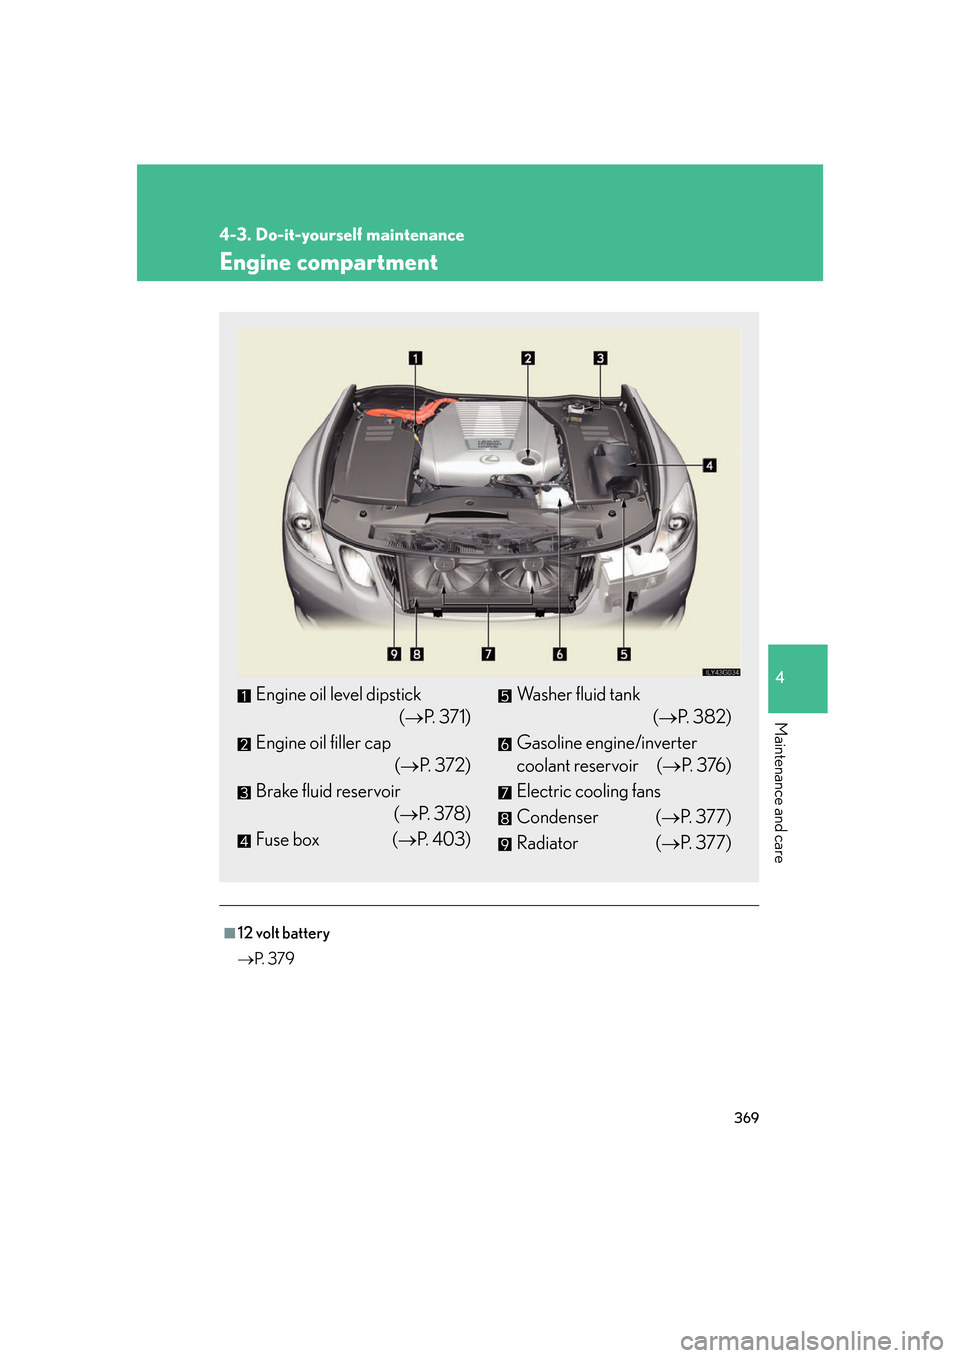 Lexus GS450h 2007  Scheduled Maintenance Guide / LEXUS 2007 GS450H FROM JULY 2006 PROD. OWNERS MANUAL (OM30A05U) 369
4-3. Do-it-yourself maintenance
4
Maintenance and care
Engine compartment
■12 volt battery
P.  3 7 9
Engine oil level dipstick 
( P. 371)
Engine oil filler cap 
( P.  3 7 2 )
Brak